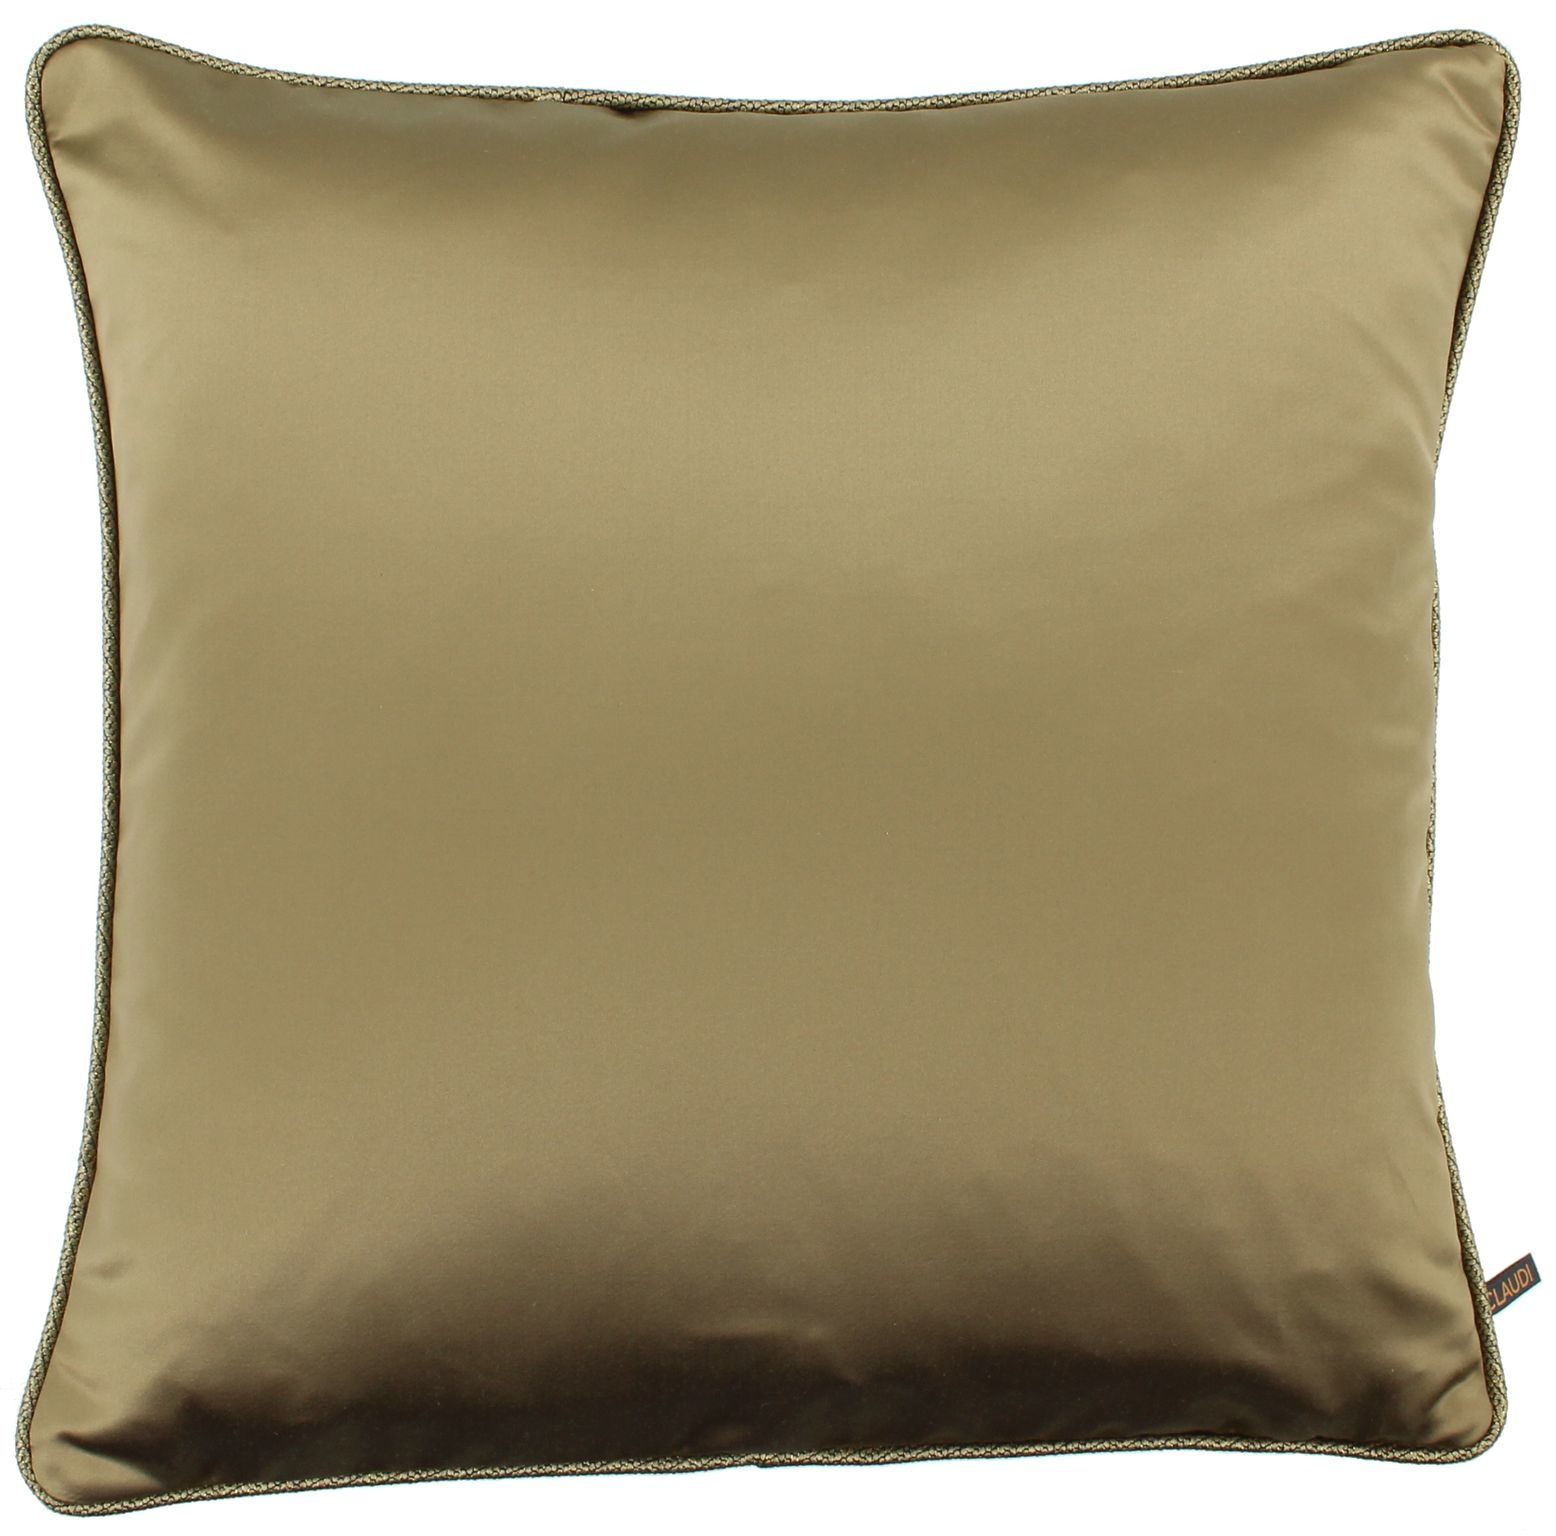 Claudi cushion 'Dafne' - Wilhelmina Designs